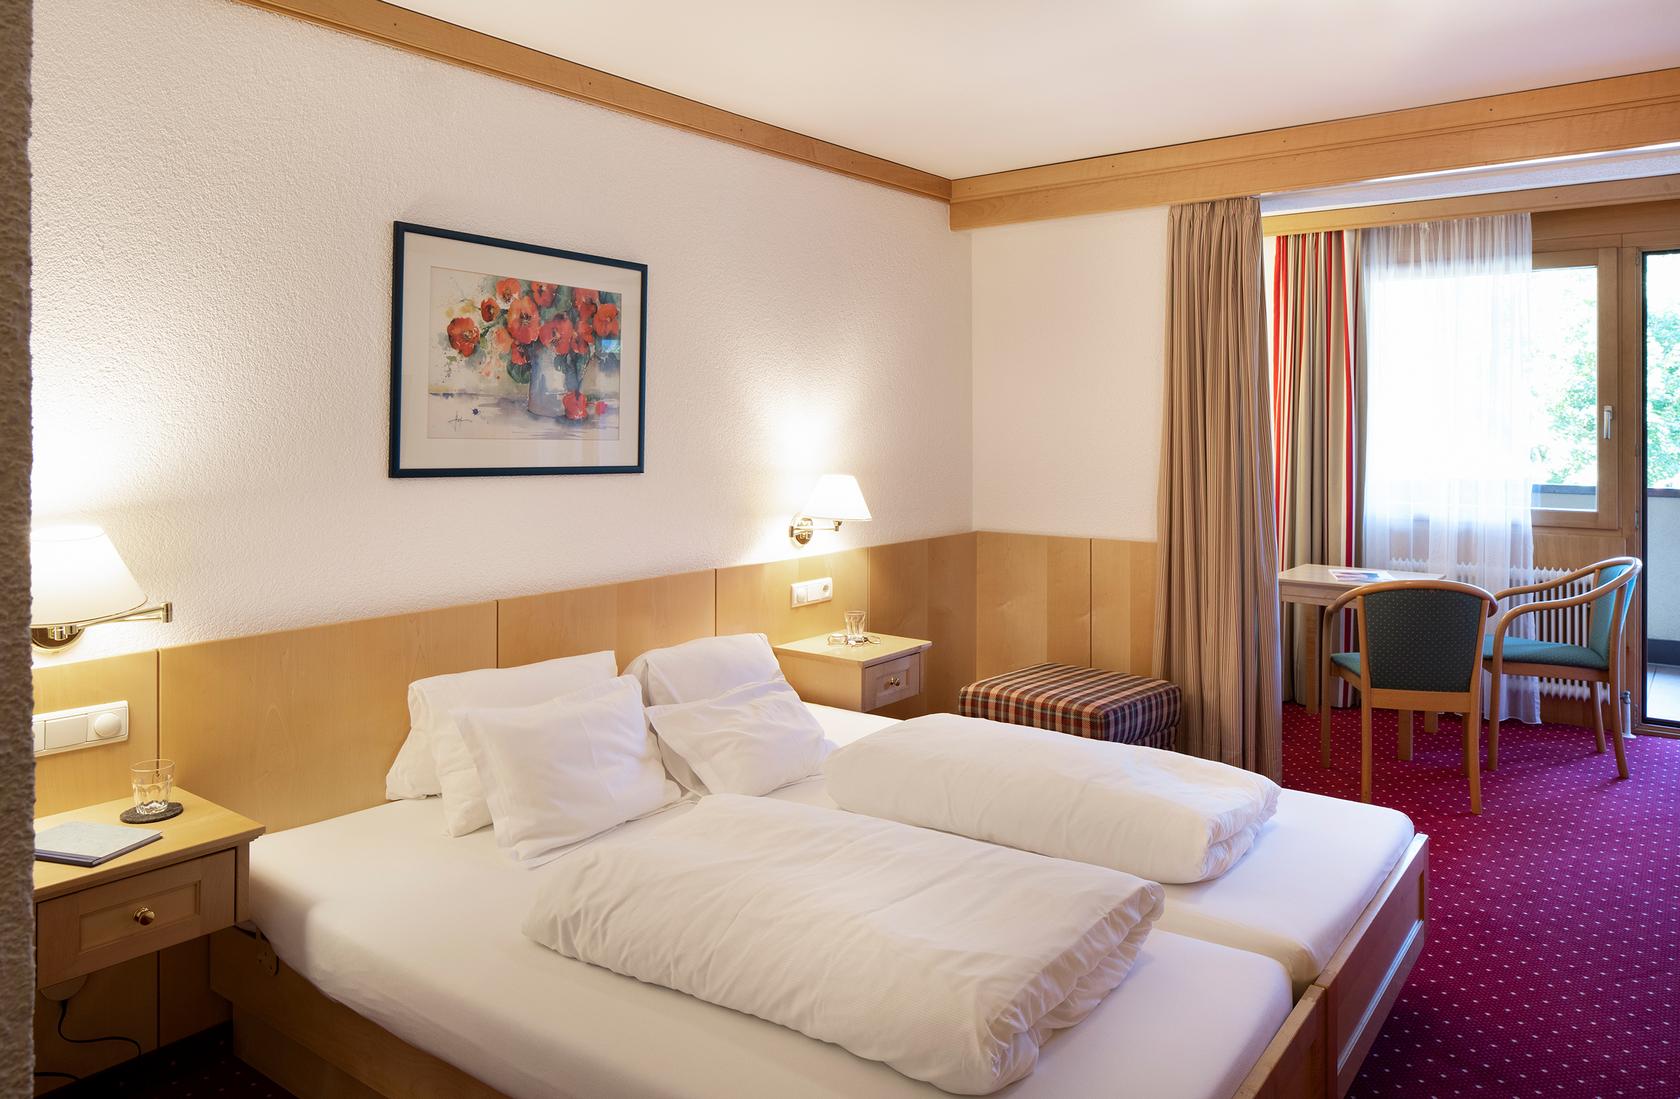 Doppelbett-Zimmer im Hotel Zimba, Montafon